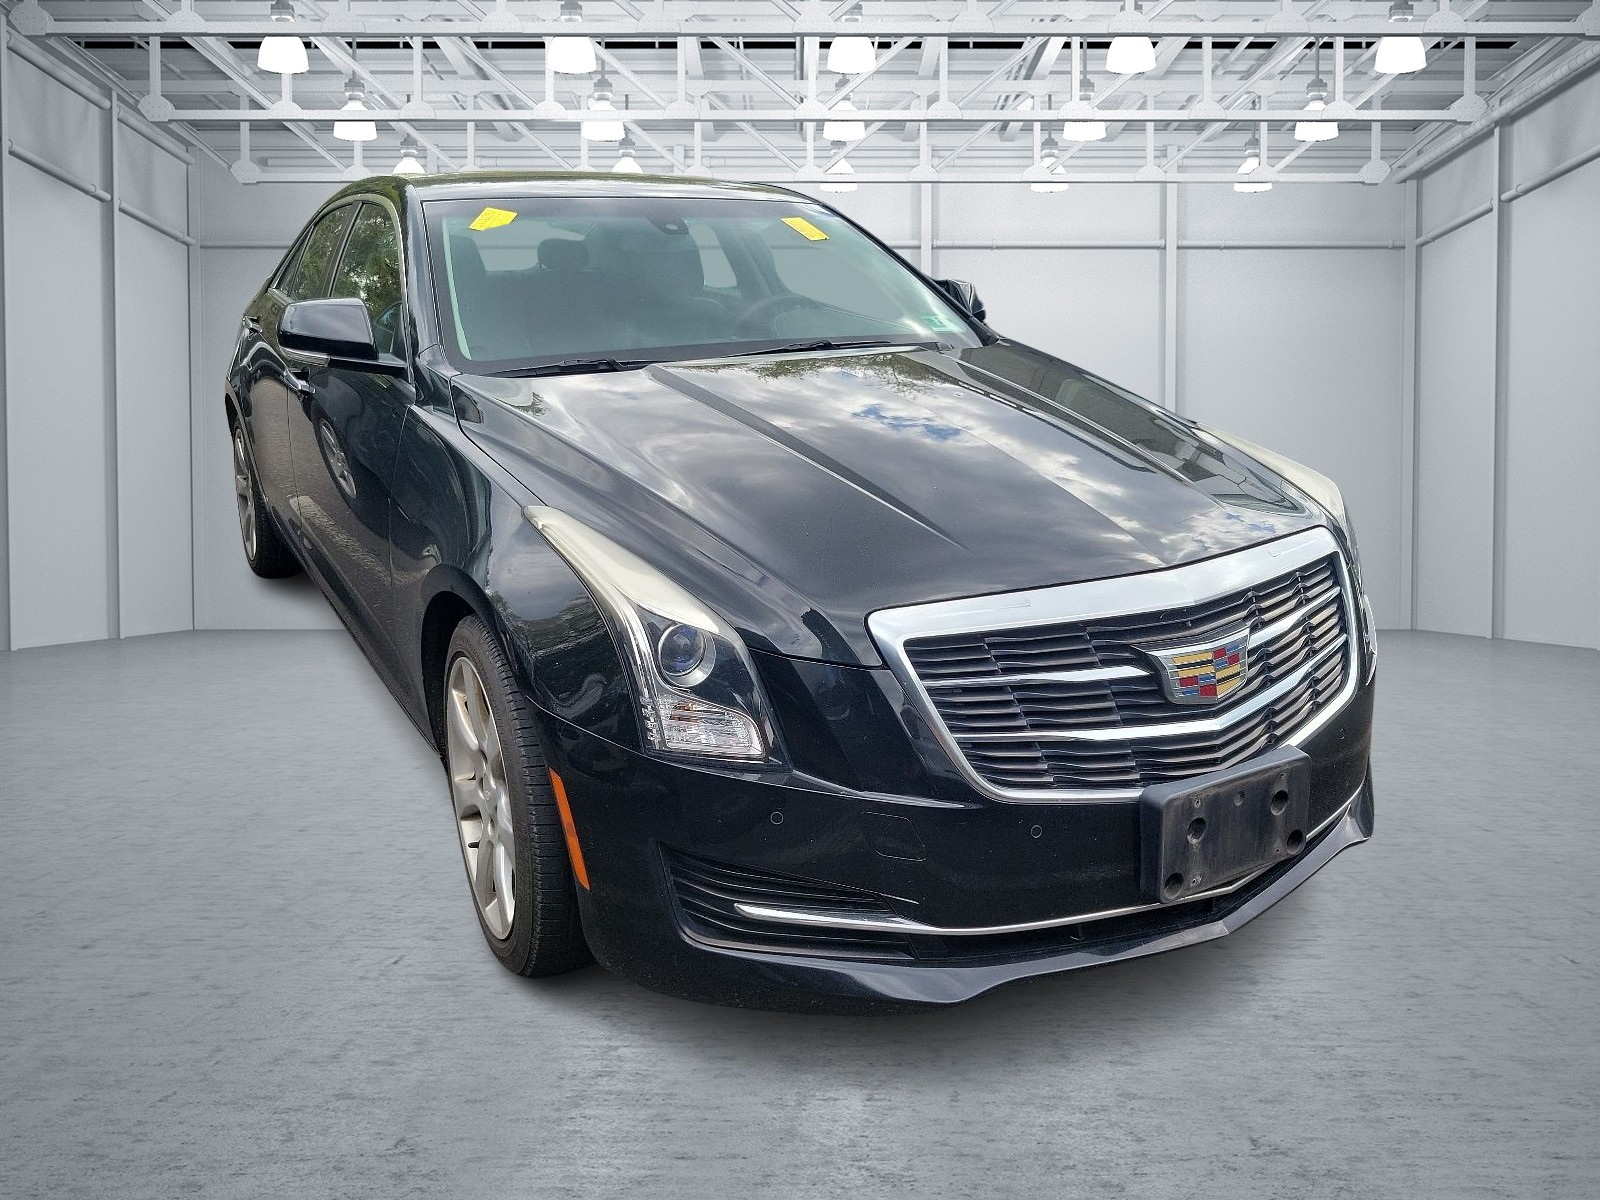 2015 Cadillac ATS 2.0T Luxury RWD